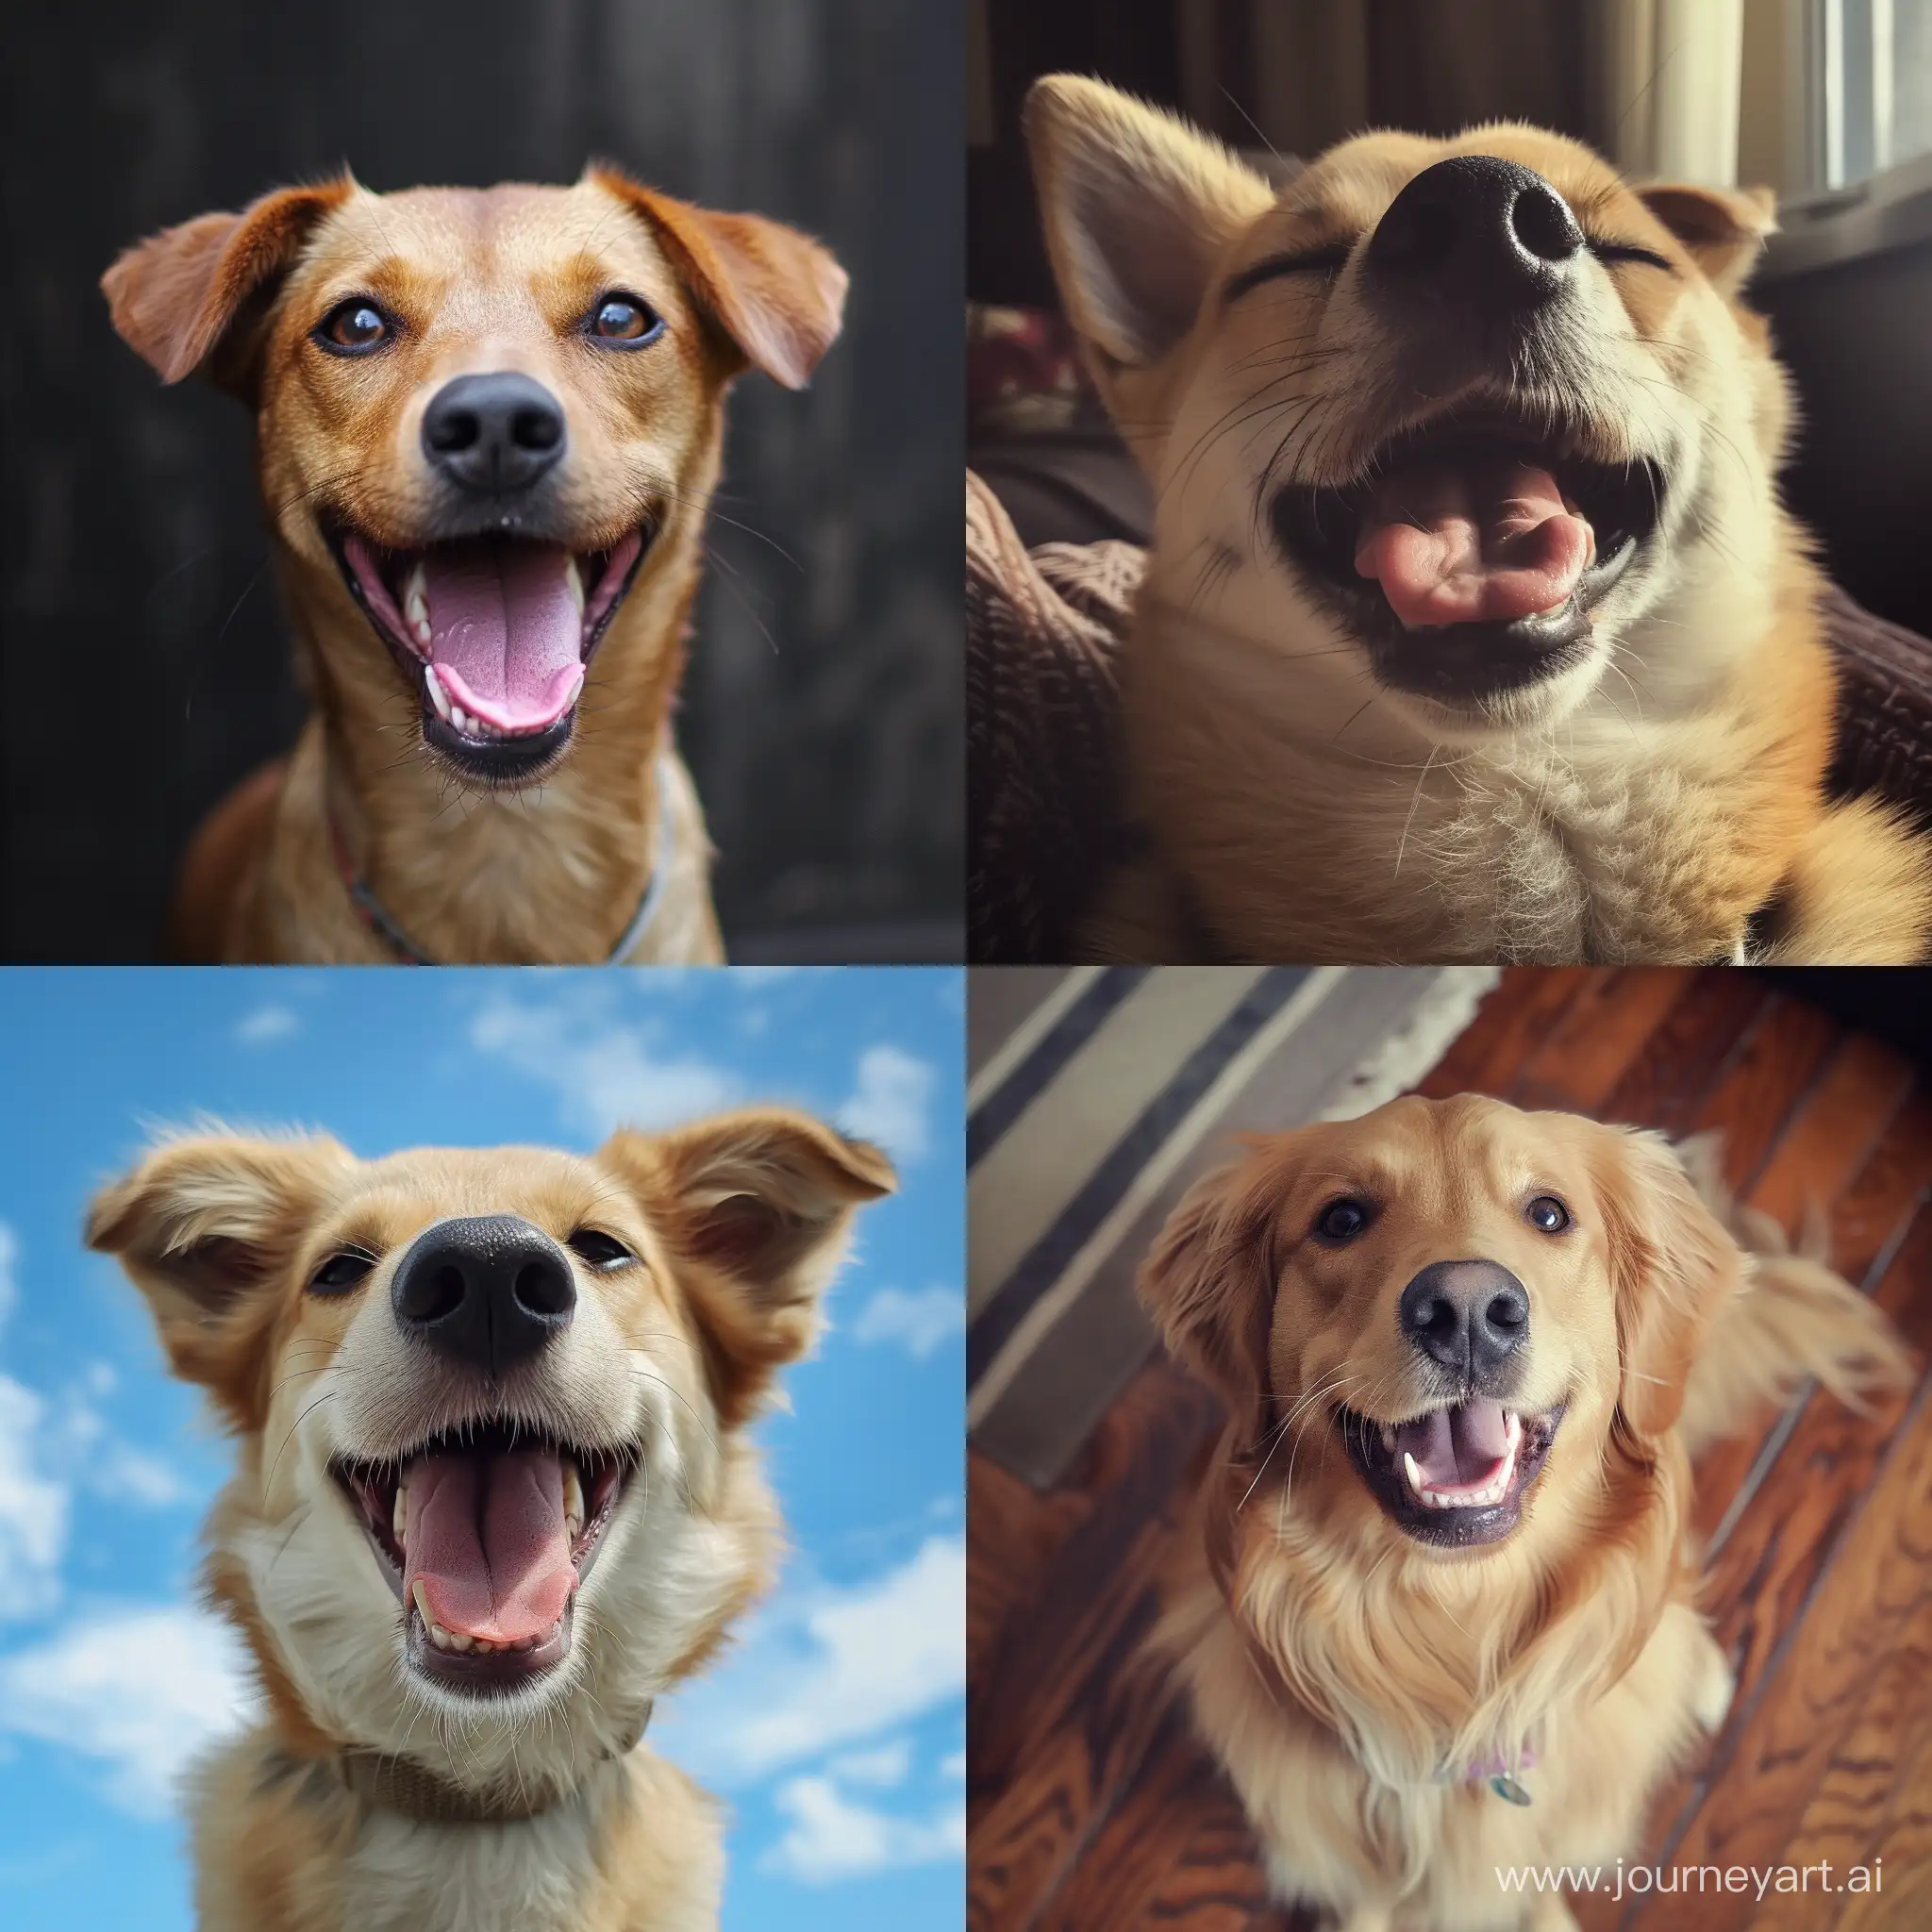 Joyful-Canine-Delight-Cheerful-Dog-with-Vibrant-Energy